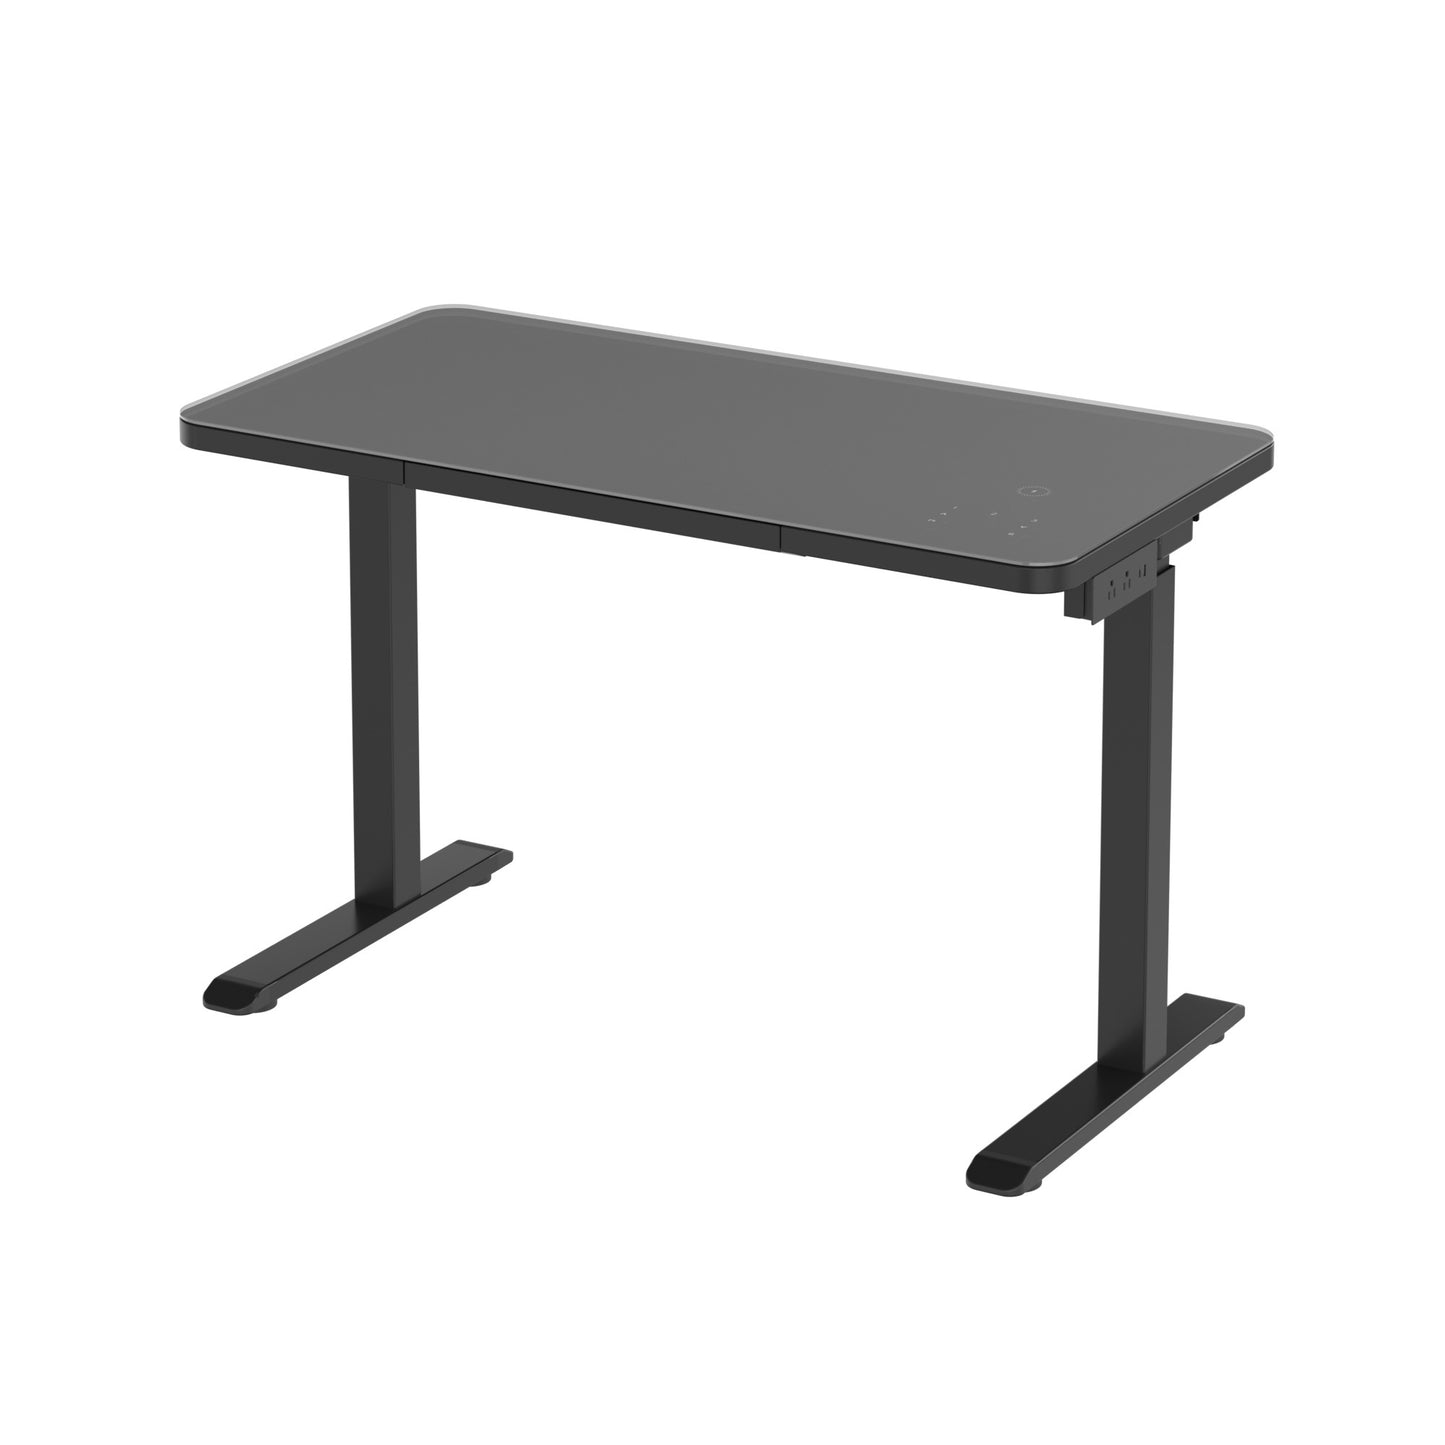 Glass tabletop standing desk
Black